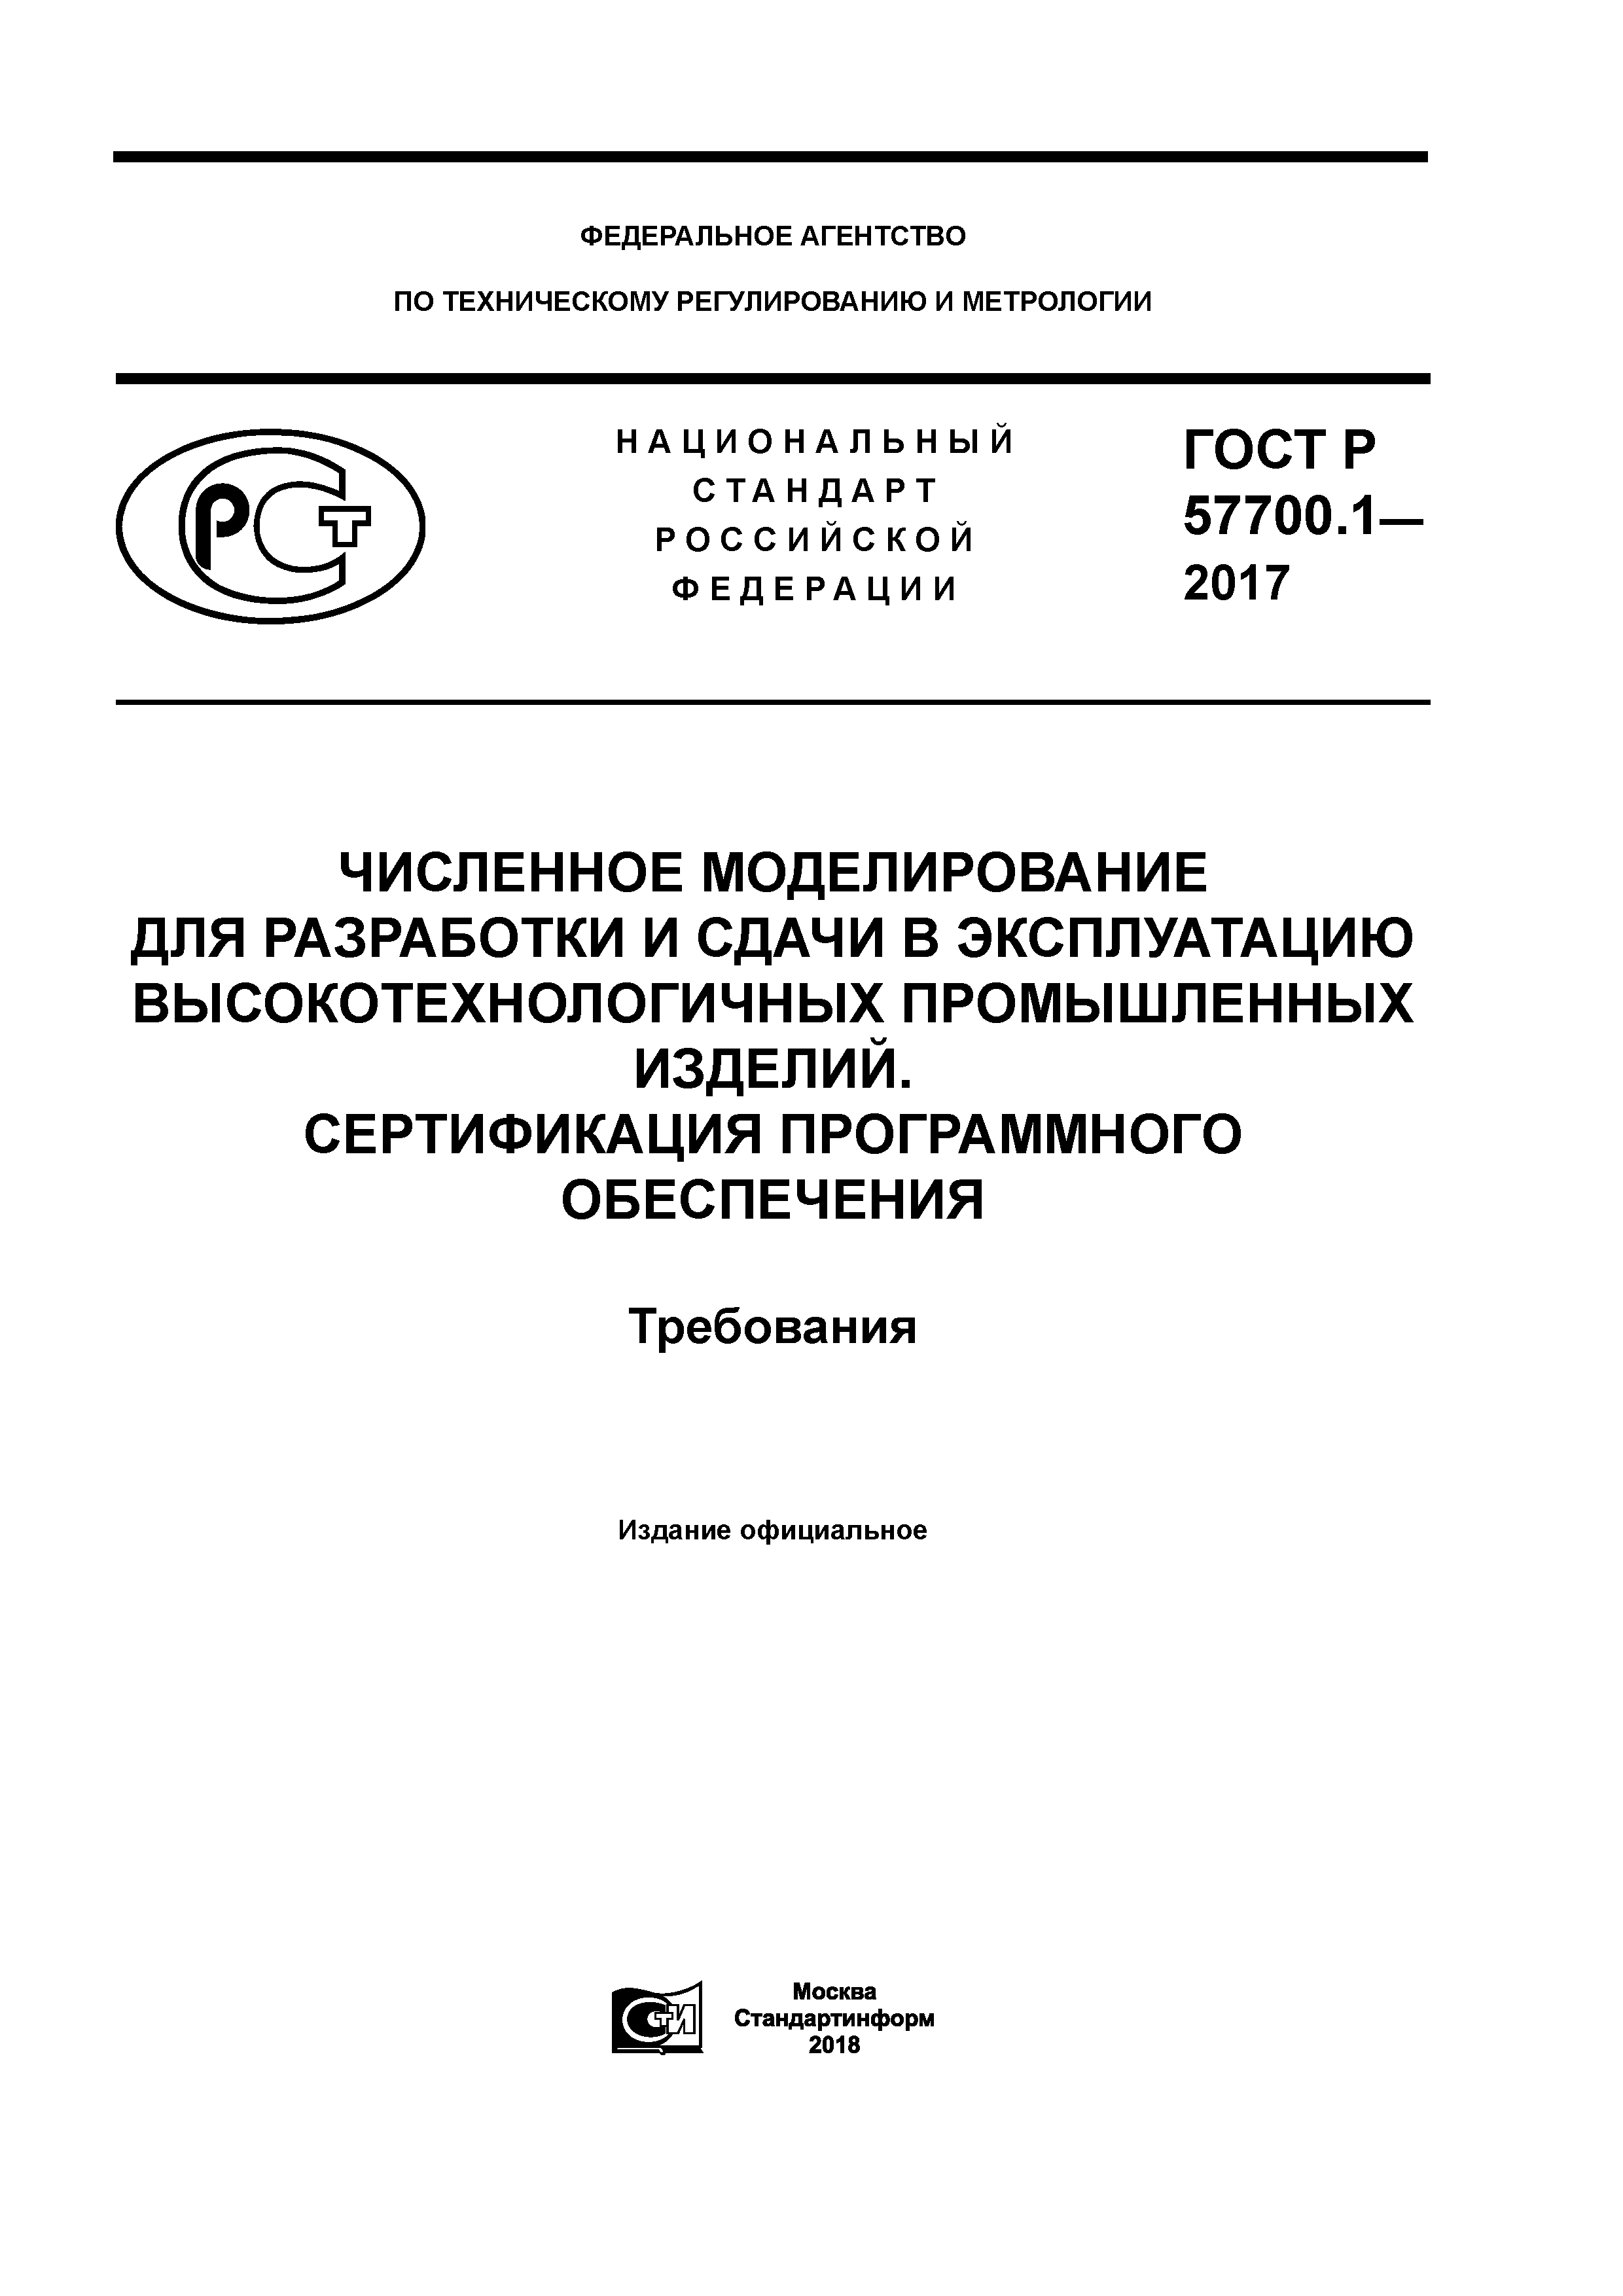 ГОСТ Р 57700.1-2017